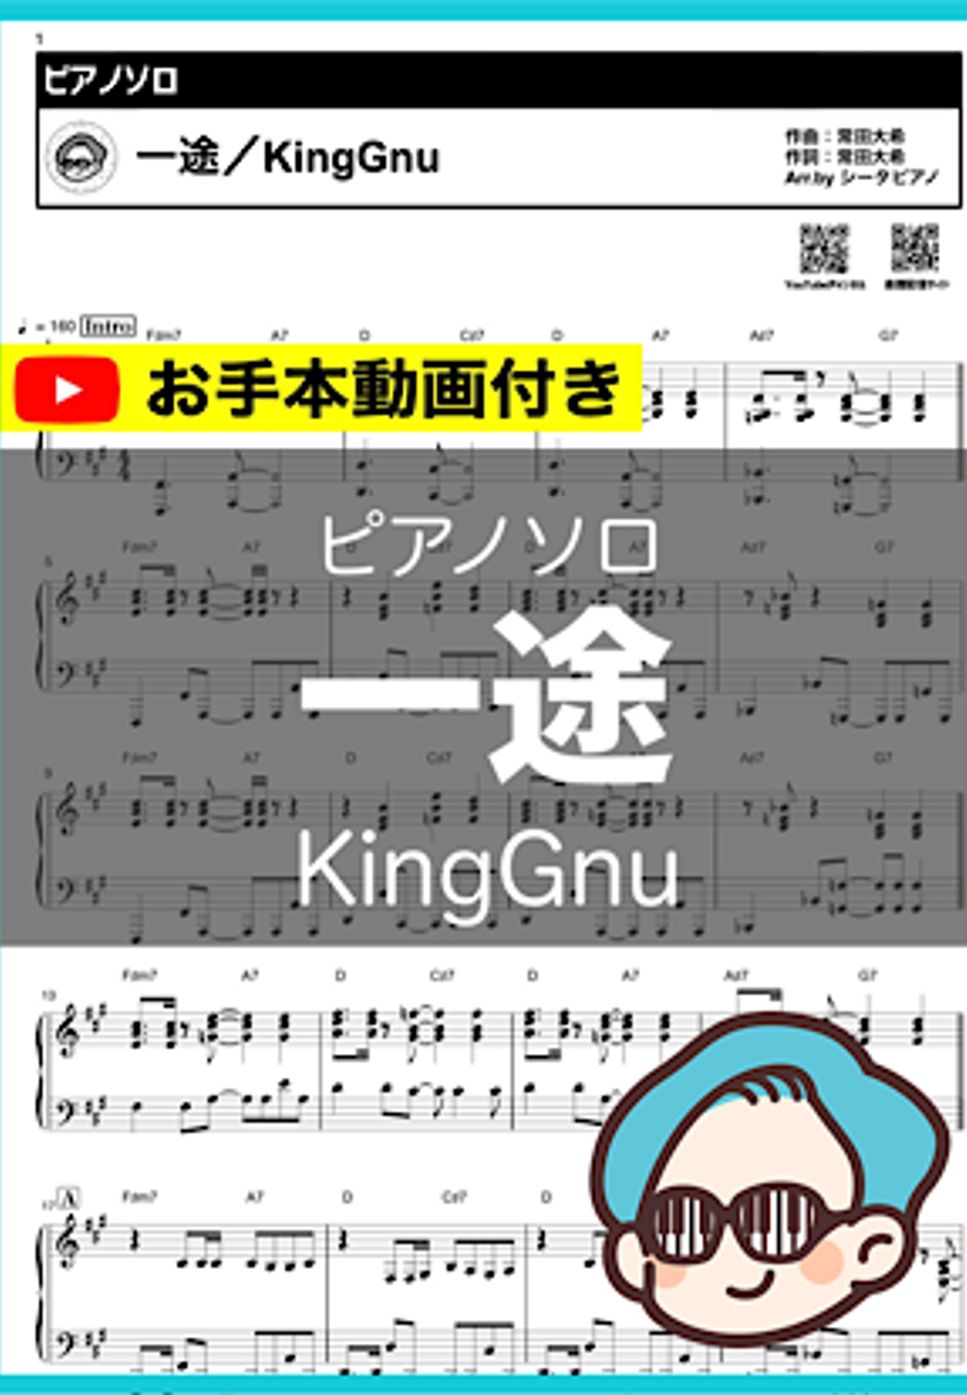 King Gnu - 一途 by シータピアノ